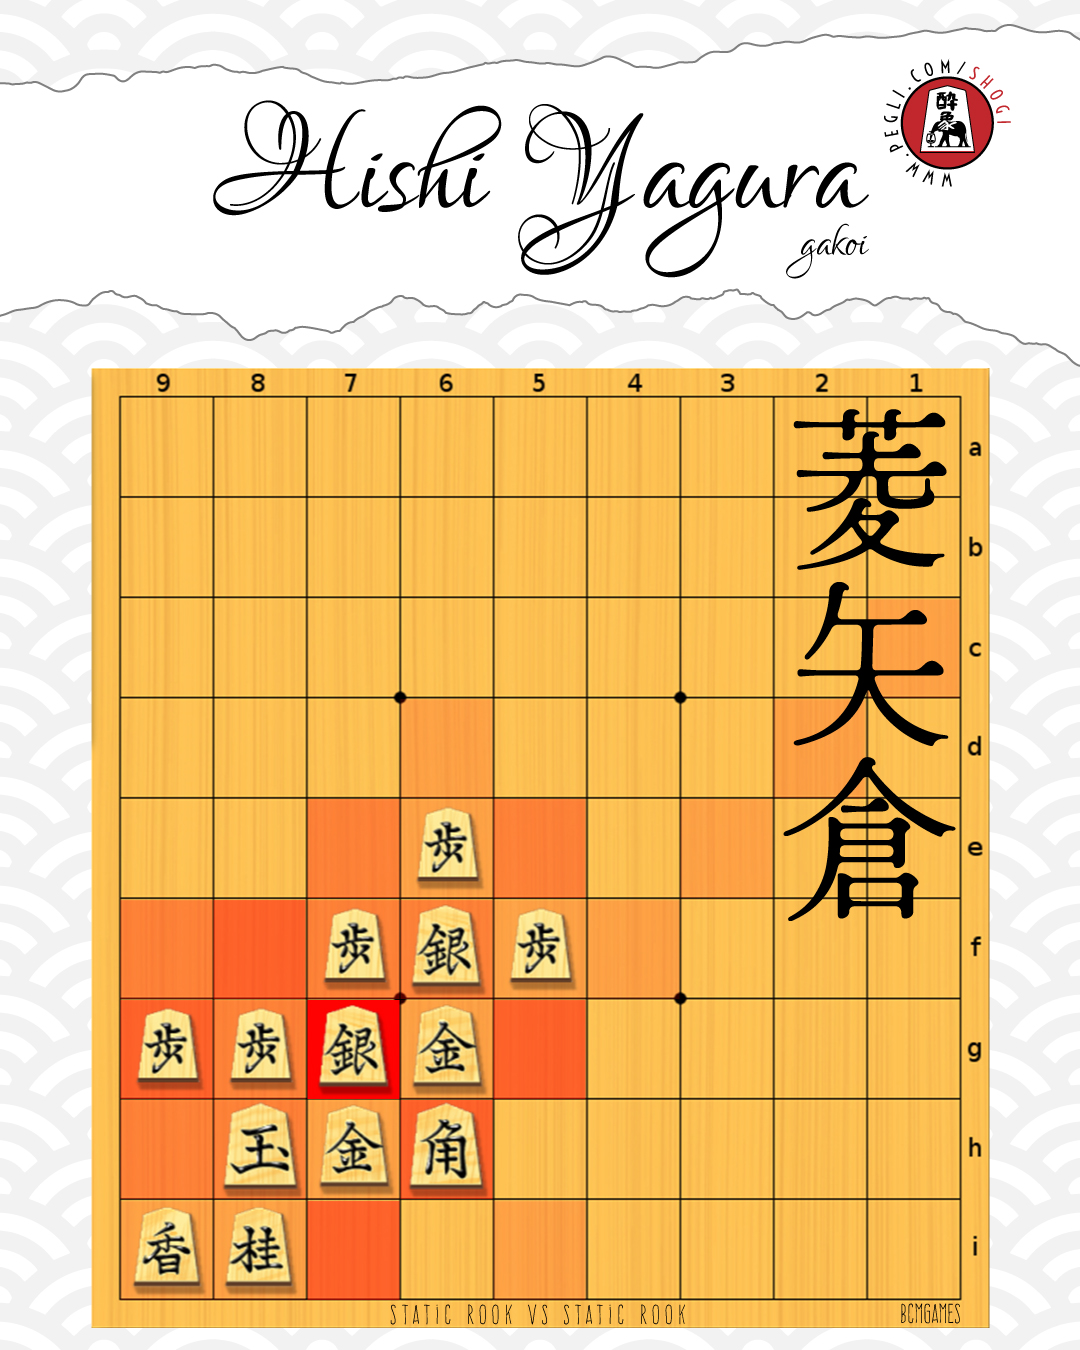 shogi - kakoi: hishi yagura gakoi warning